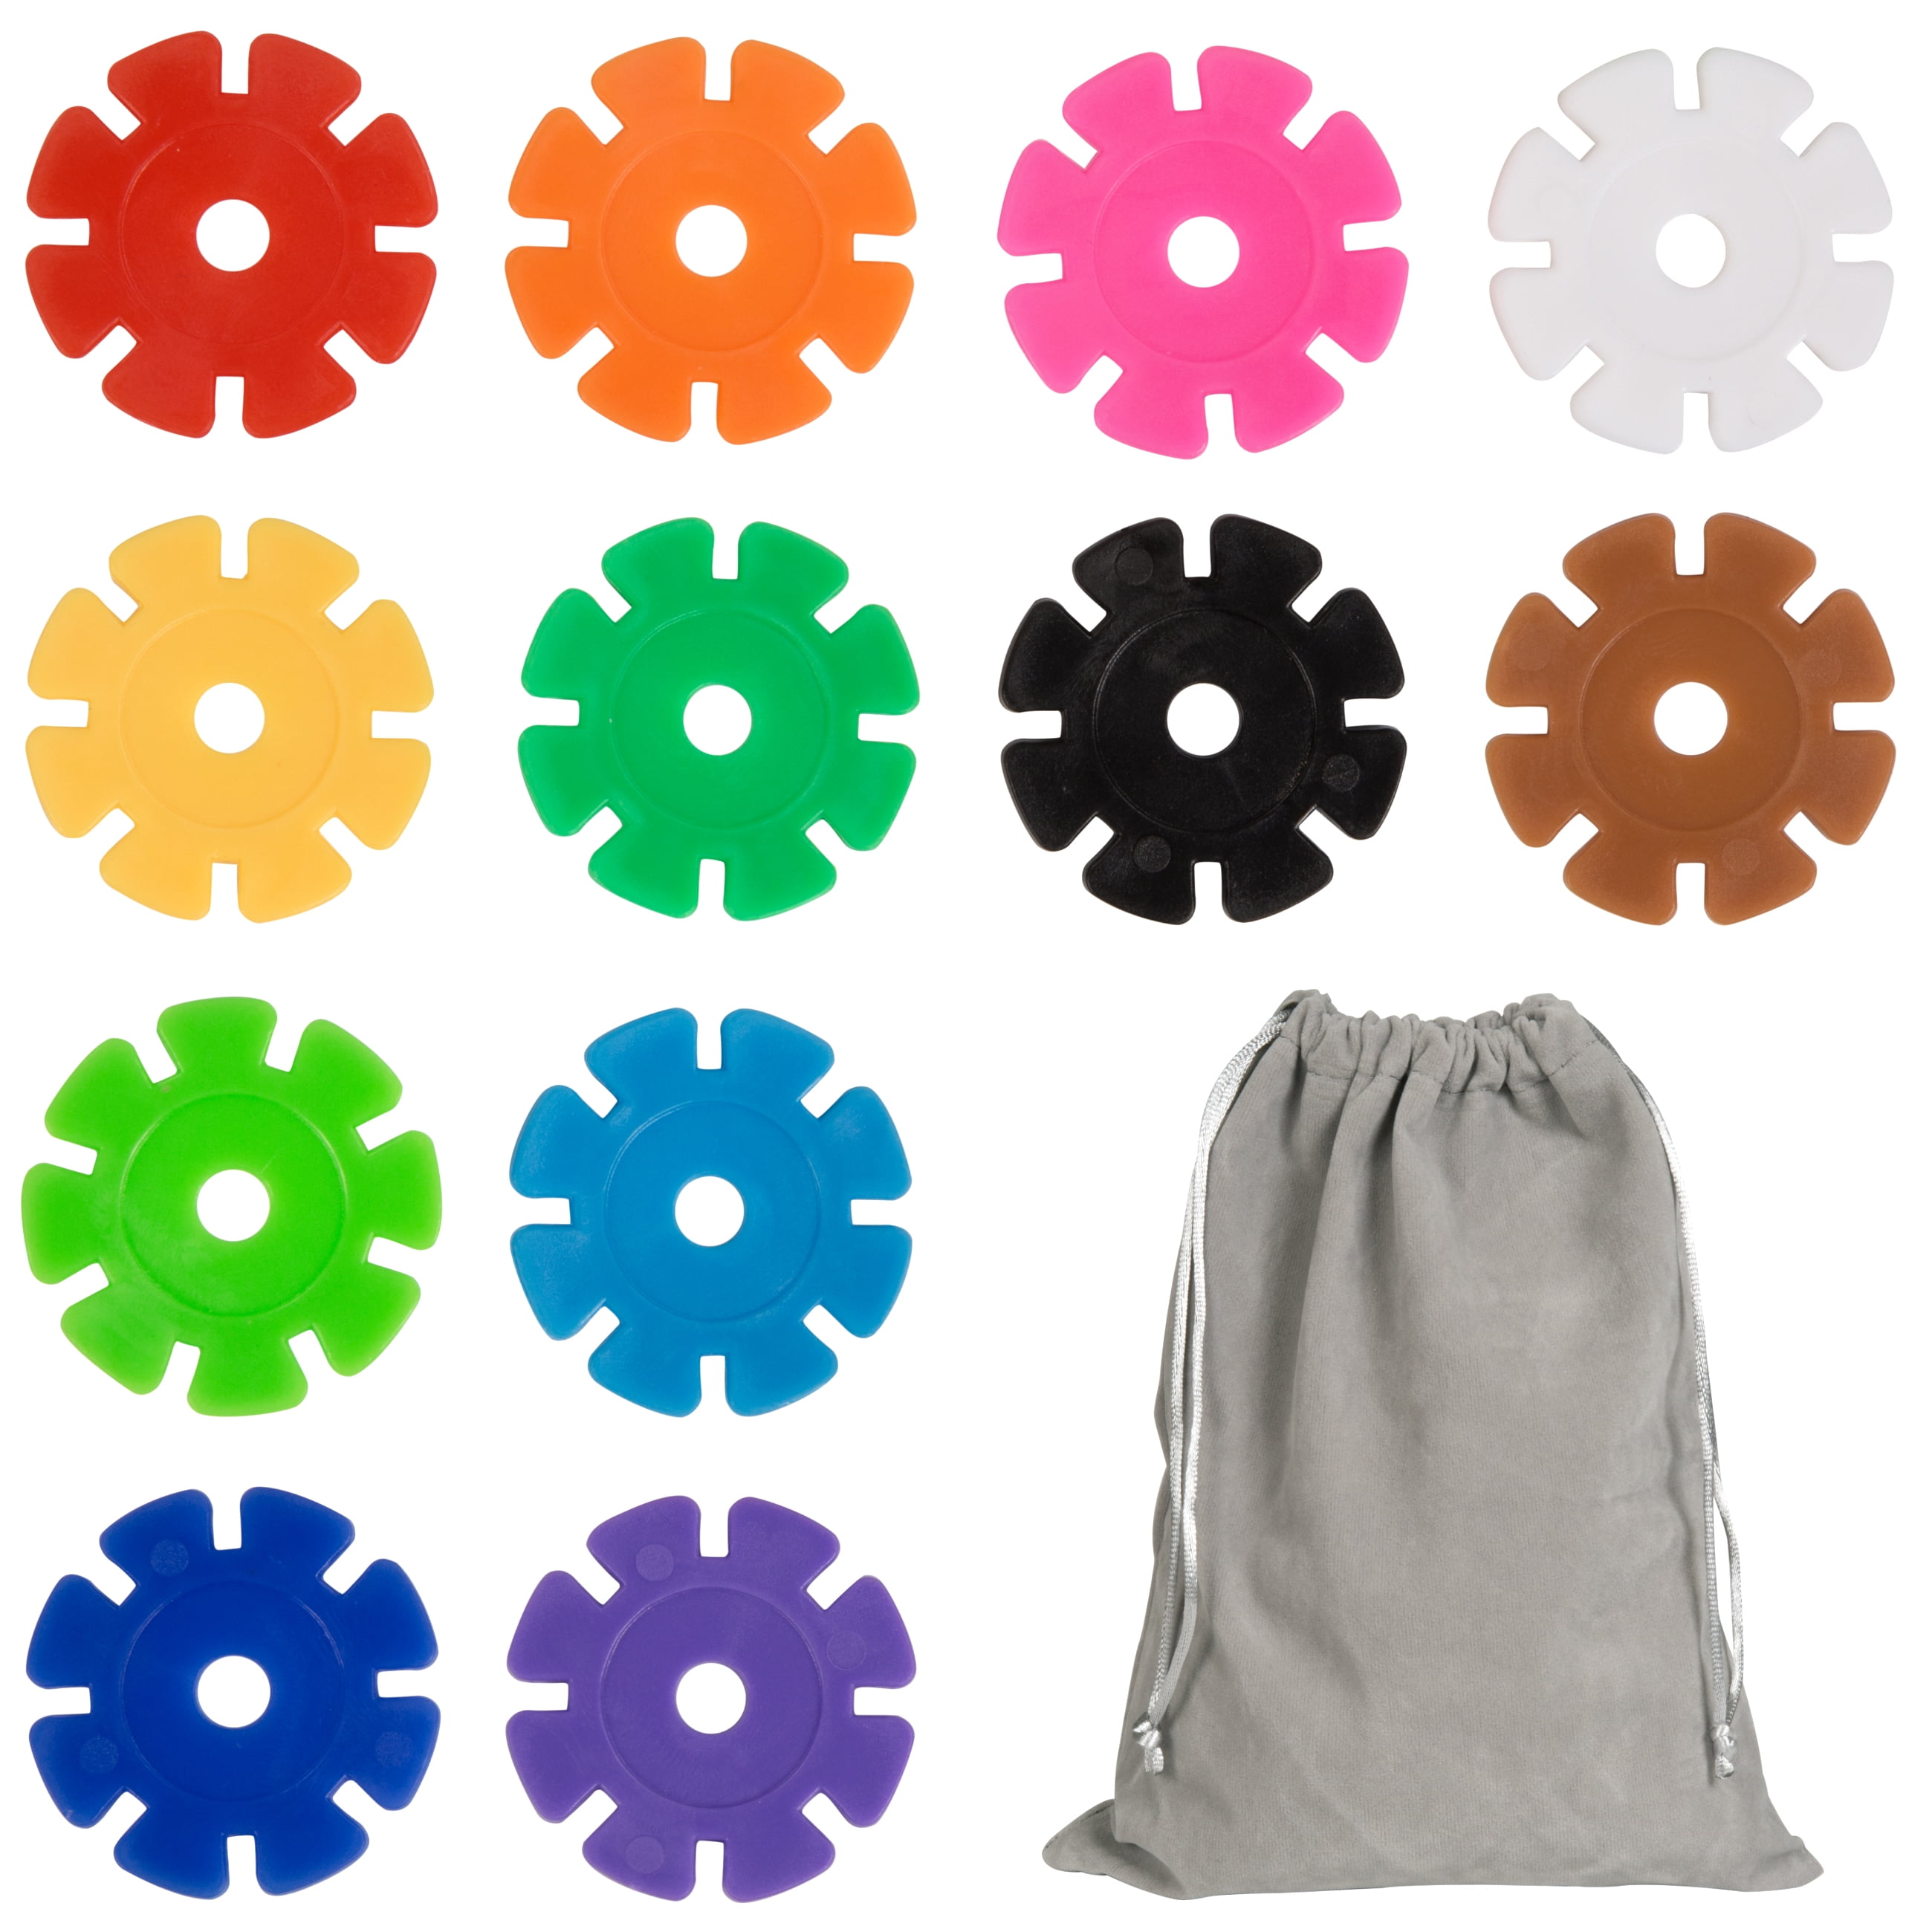 Best Choice Products 360-Piece Kids Educational STEM Toy Plastic Building  Block Discs Set w/ Carrying Bag - Multicolor